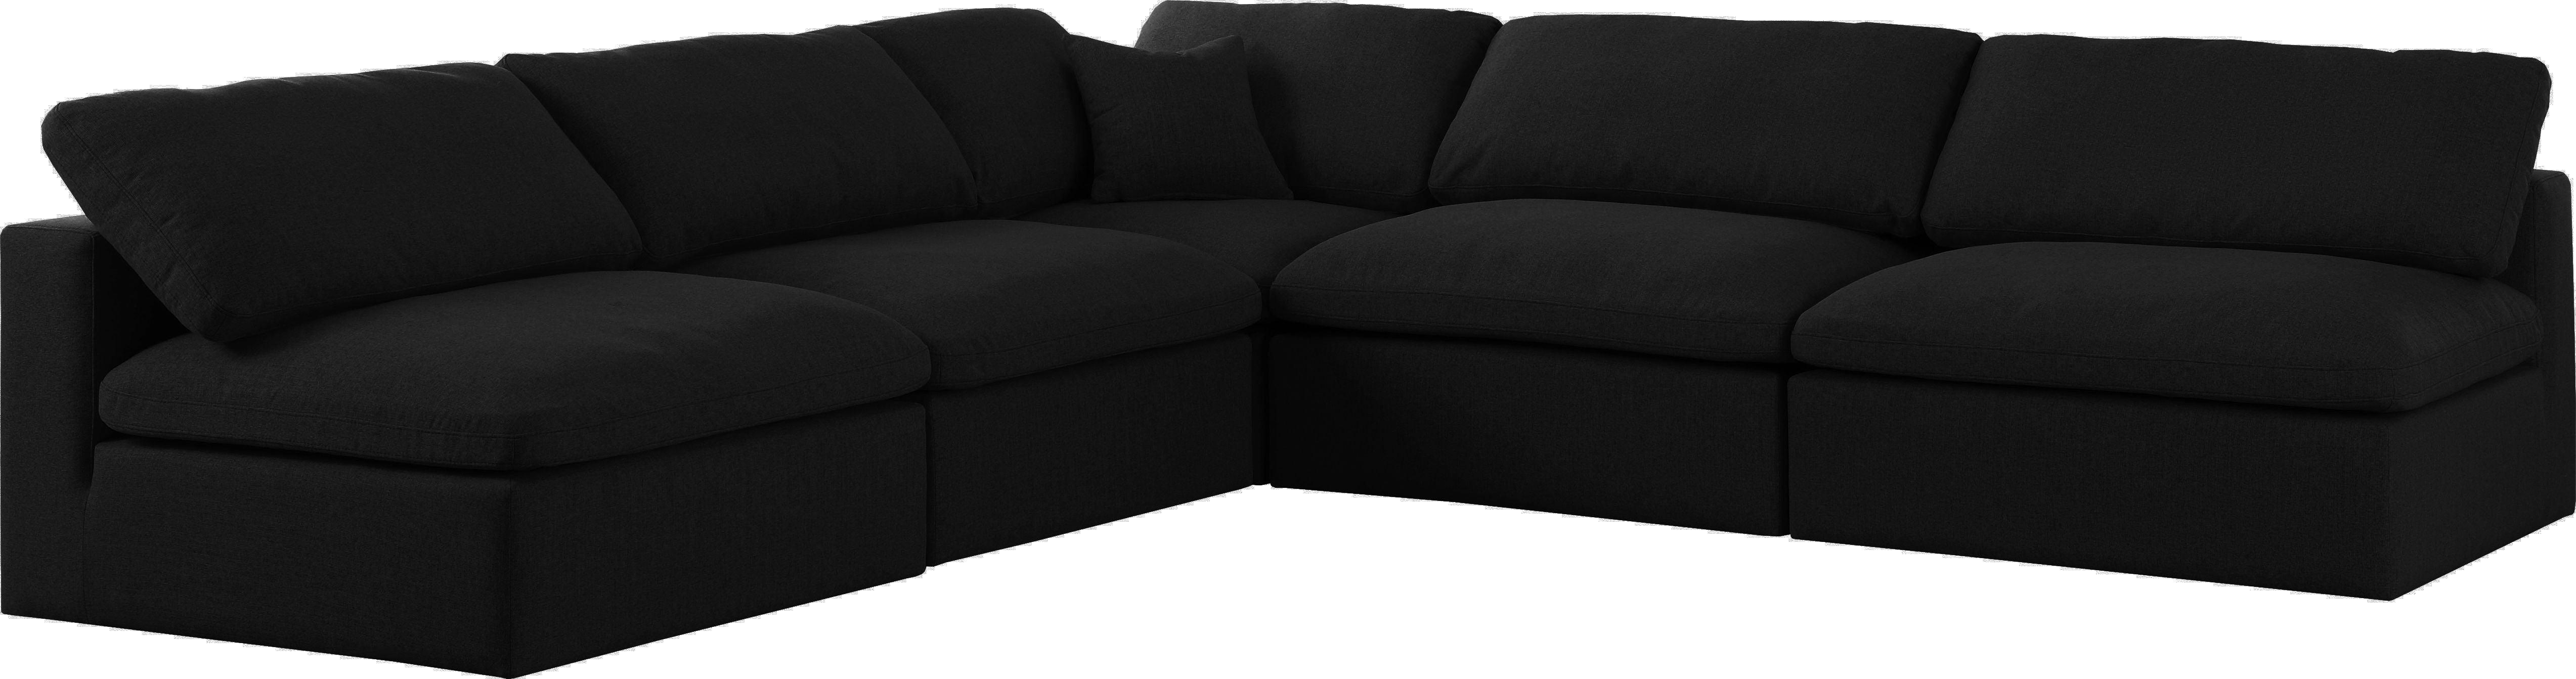 Meridian Furniture - Serene - Linen Textured Fabric Deluxe Comfort 5 Piece Modular Sectional - Black - 5th Avenue Furniture